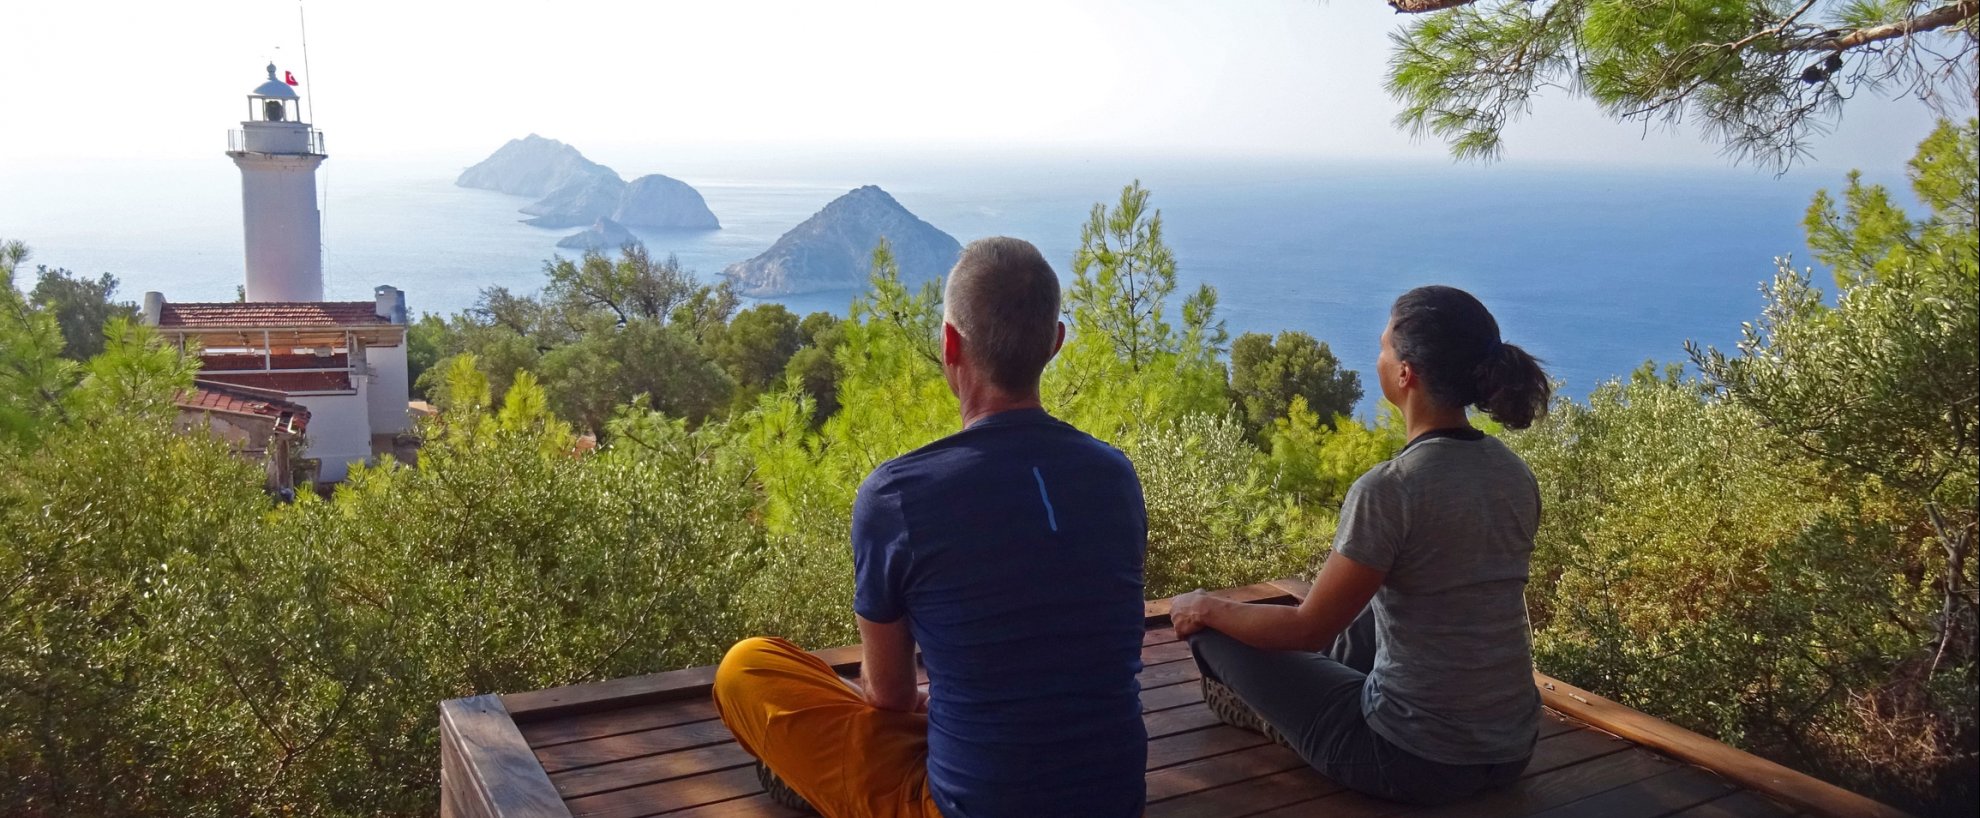 yoga urlaub reisen türkei lyksiche küste lykia lodge ausblick meer